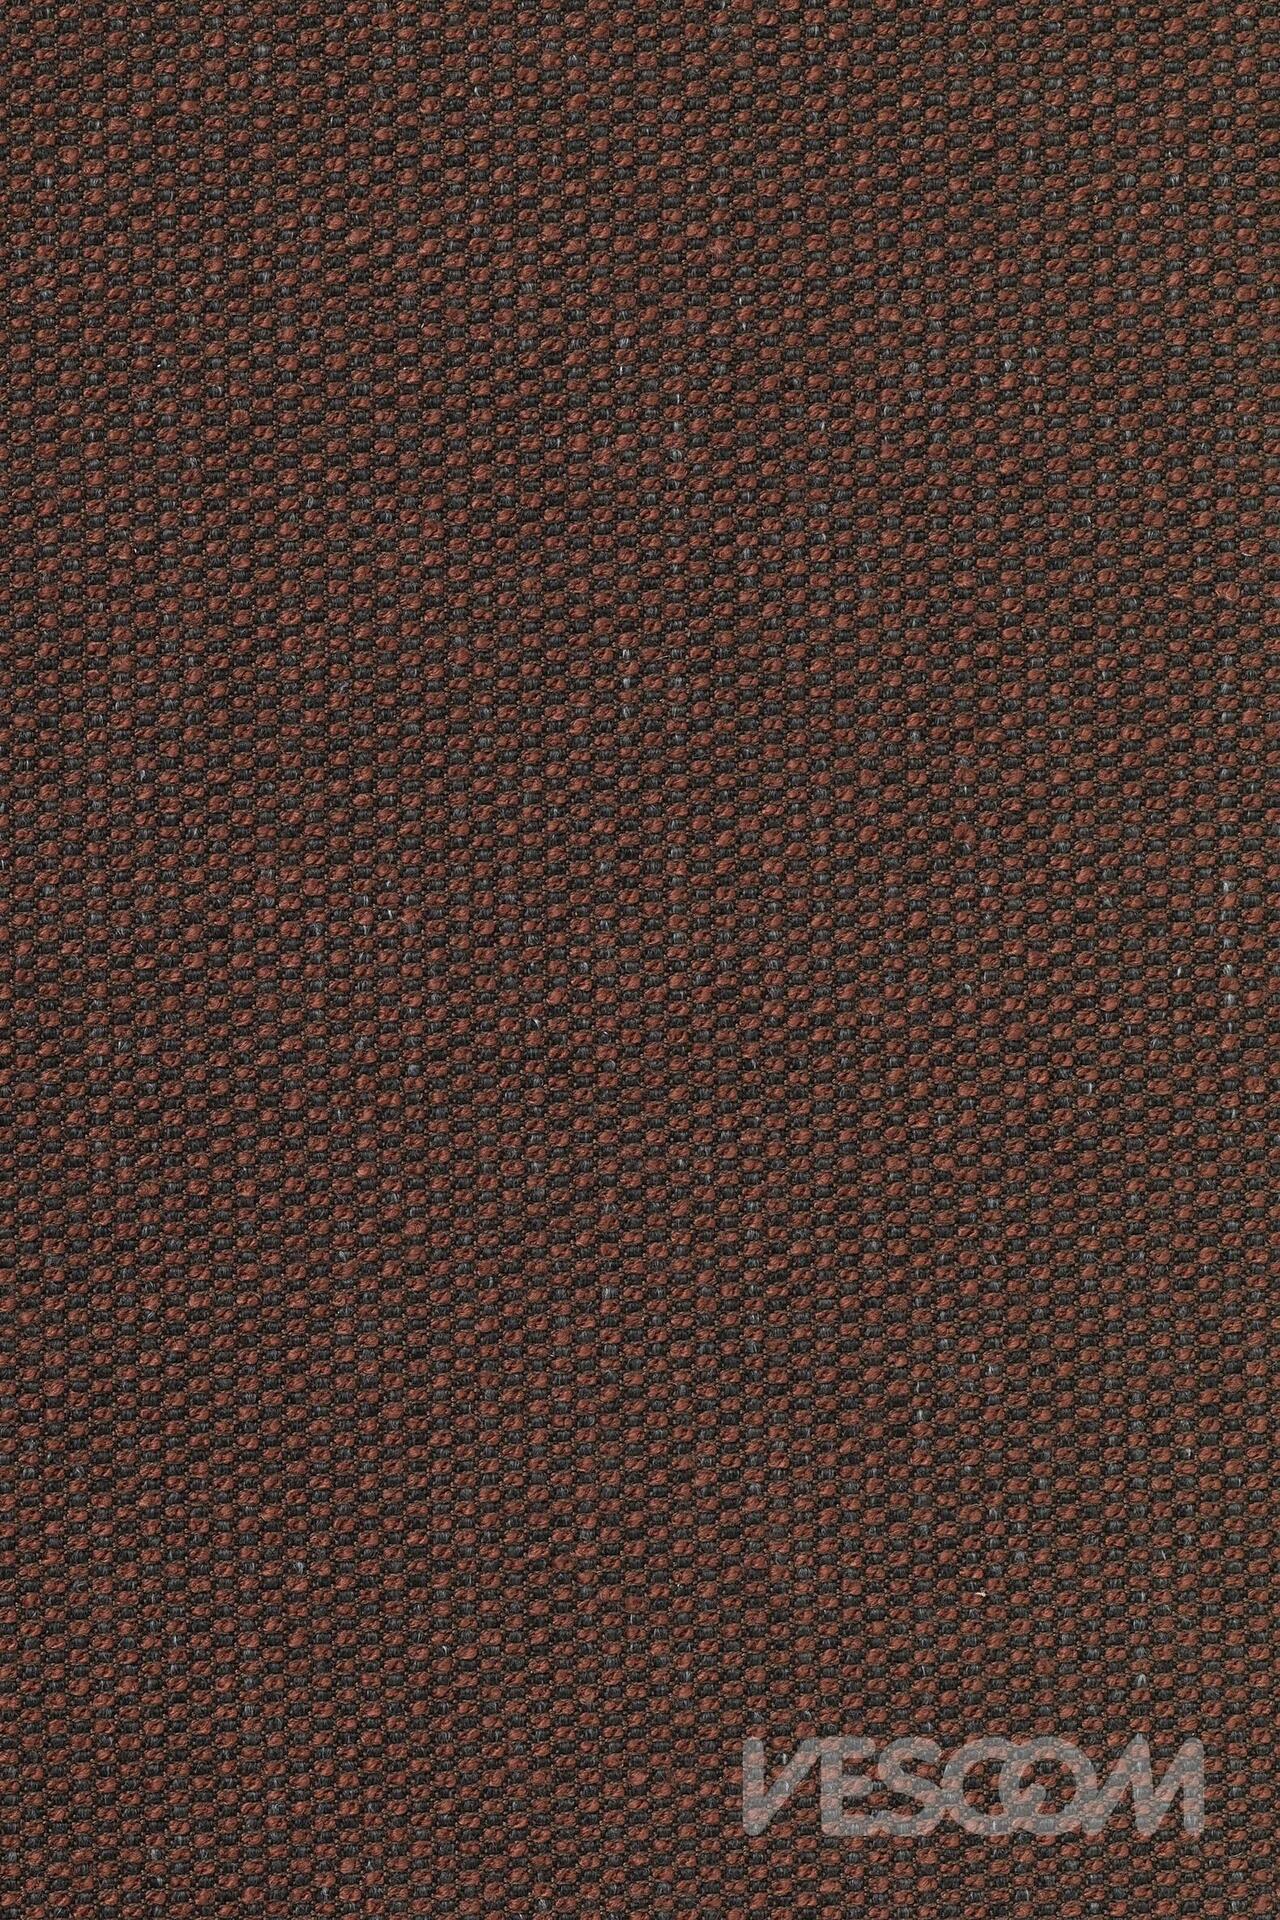 Vescom-Burton-Upholstery-Fabric-7056.06.jpg